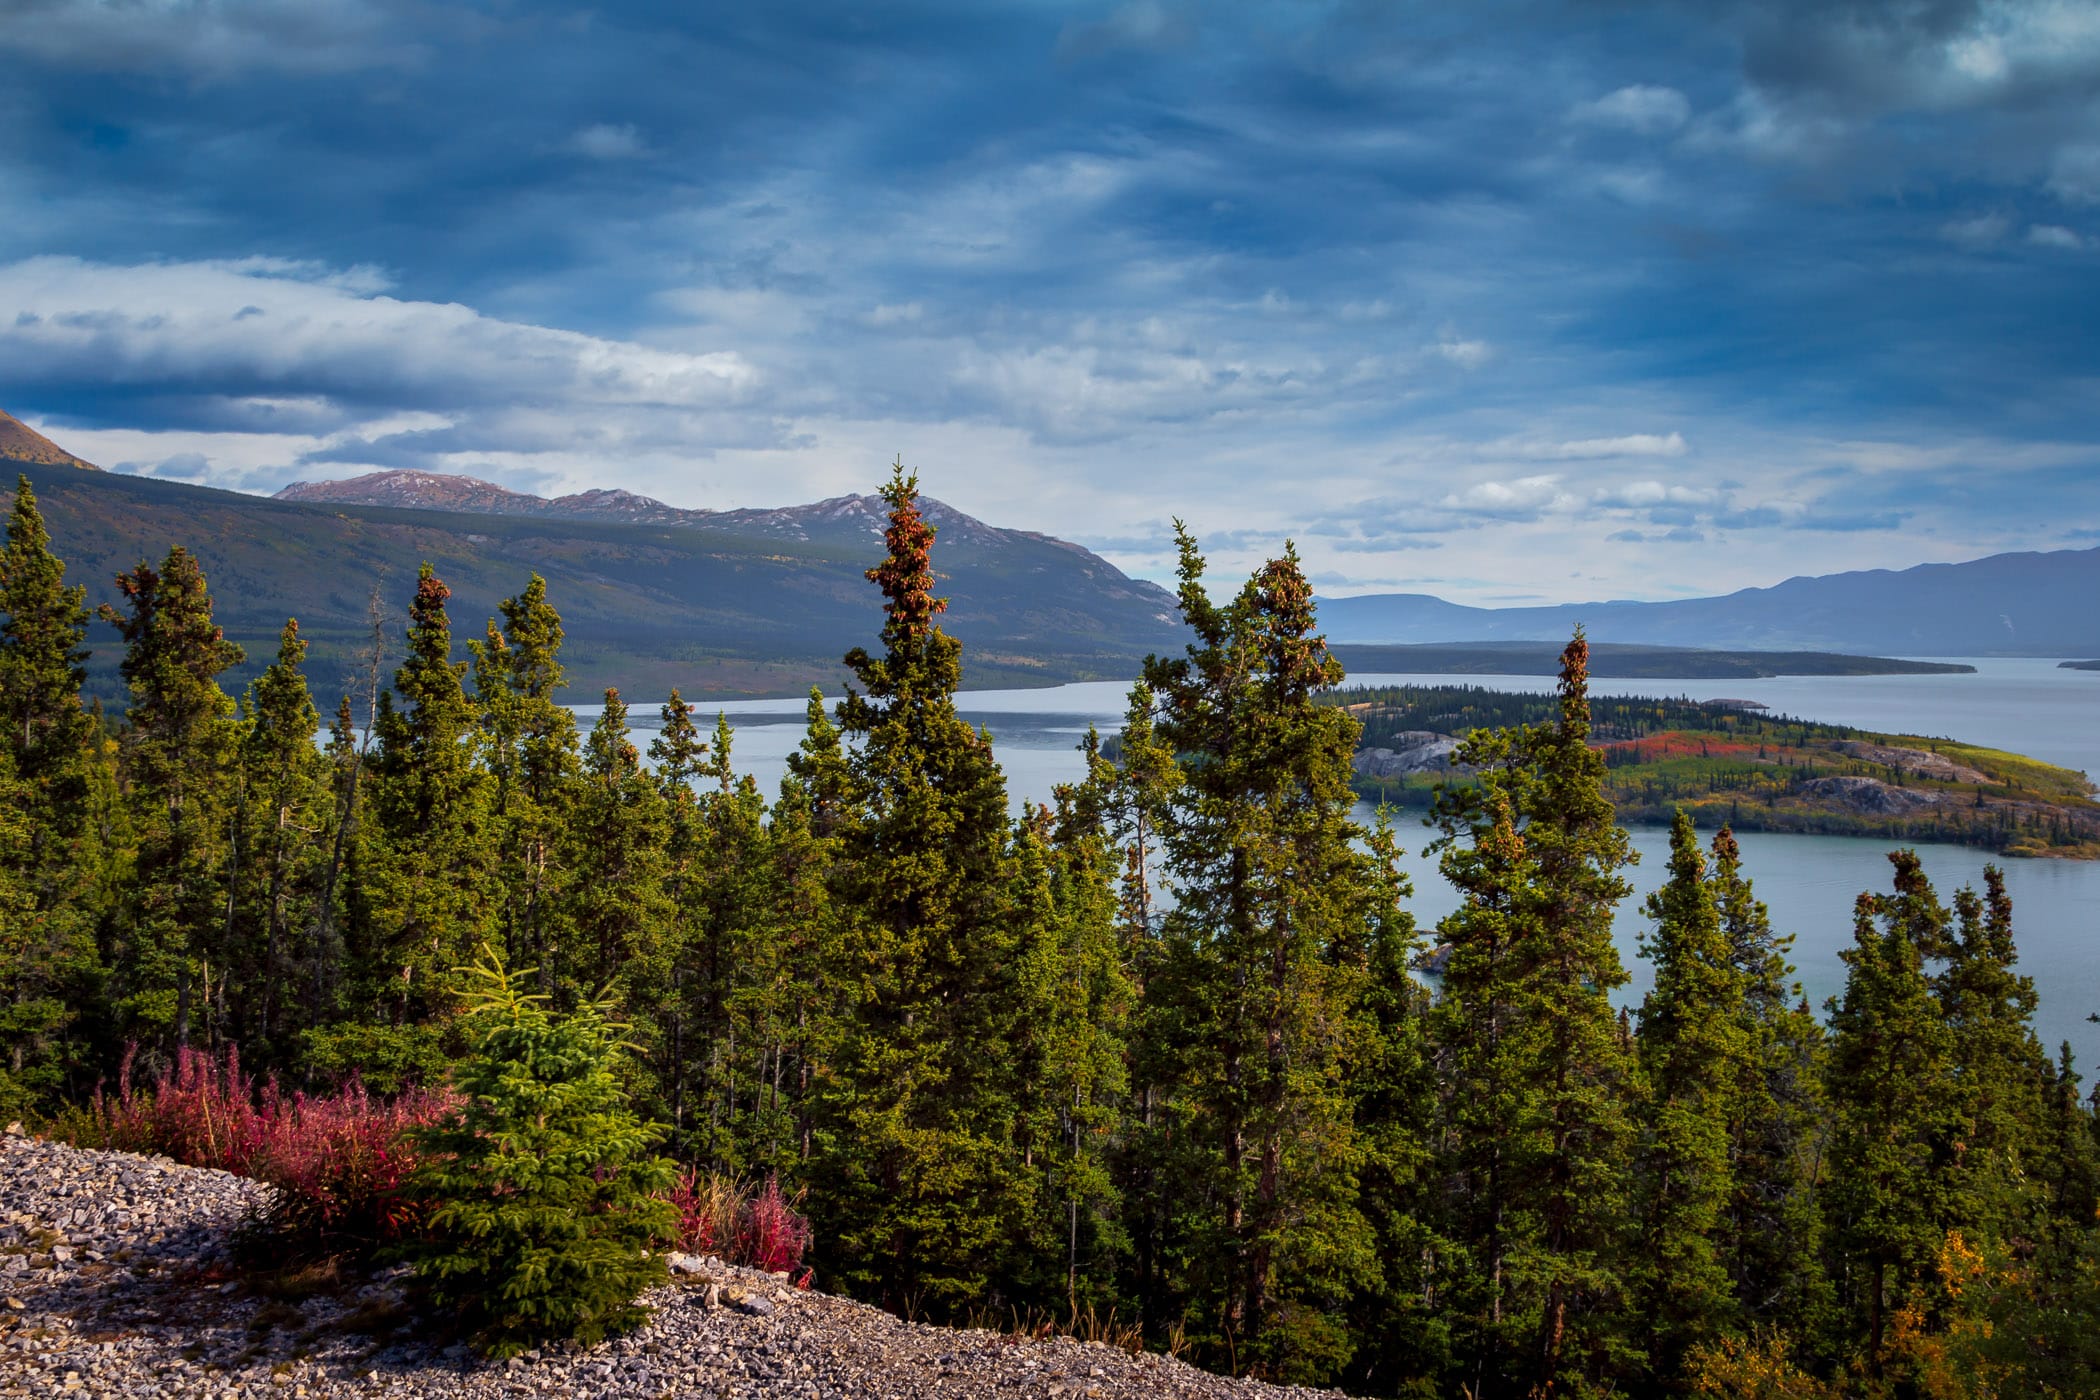 Pine trees survey the Yukon Territory's Tagish Lake and Bove Island.